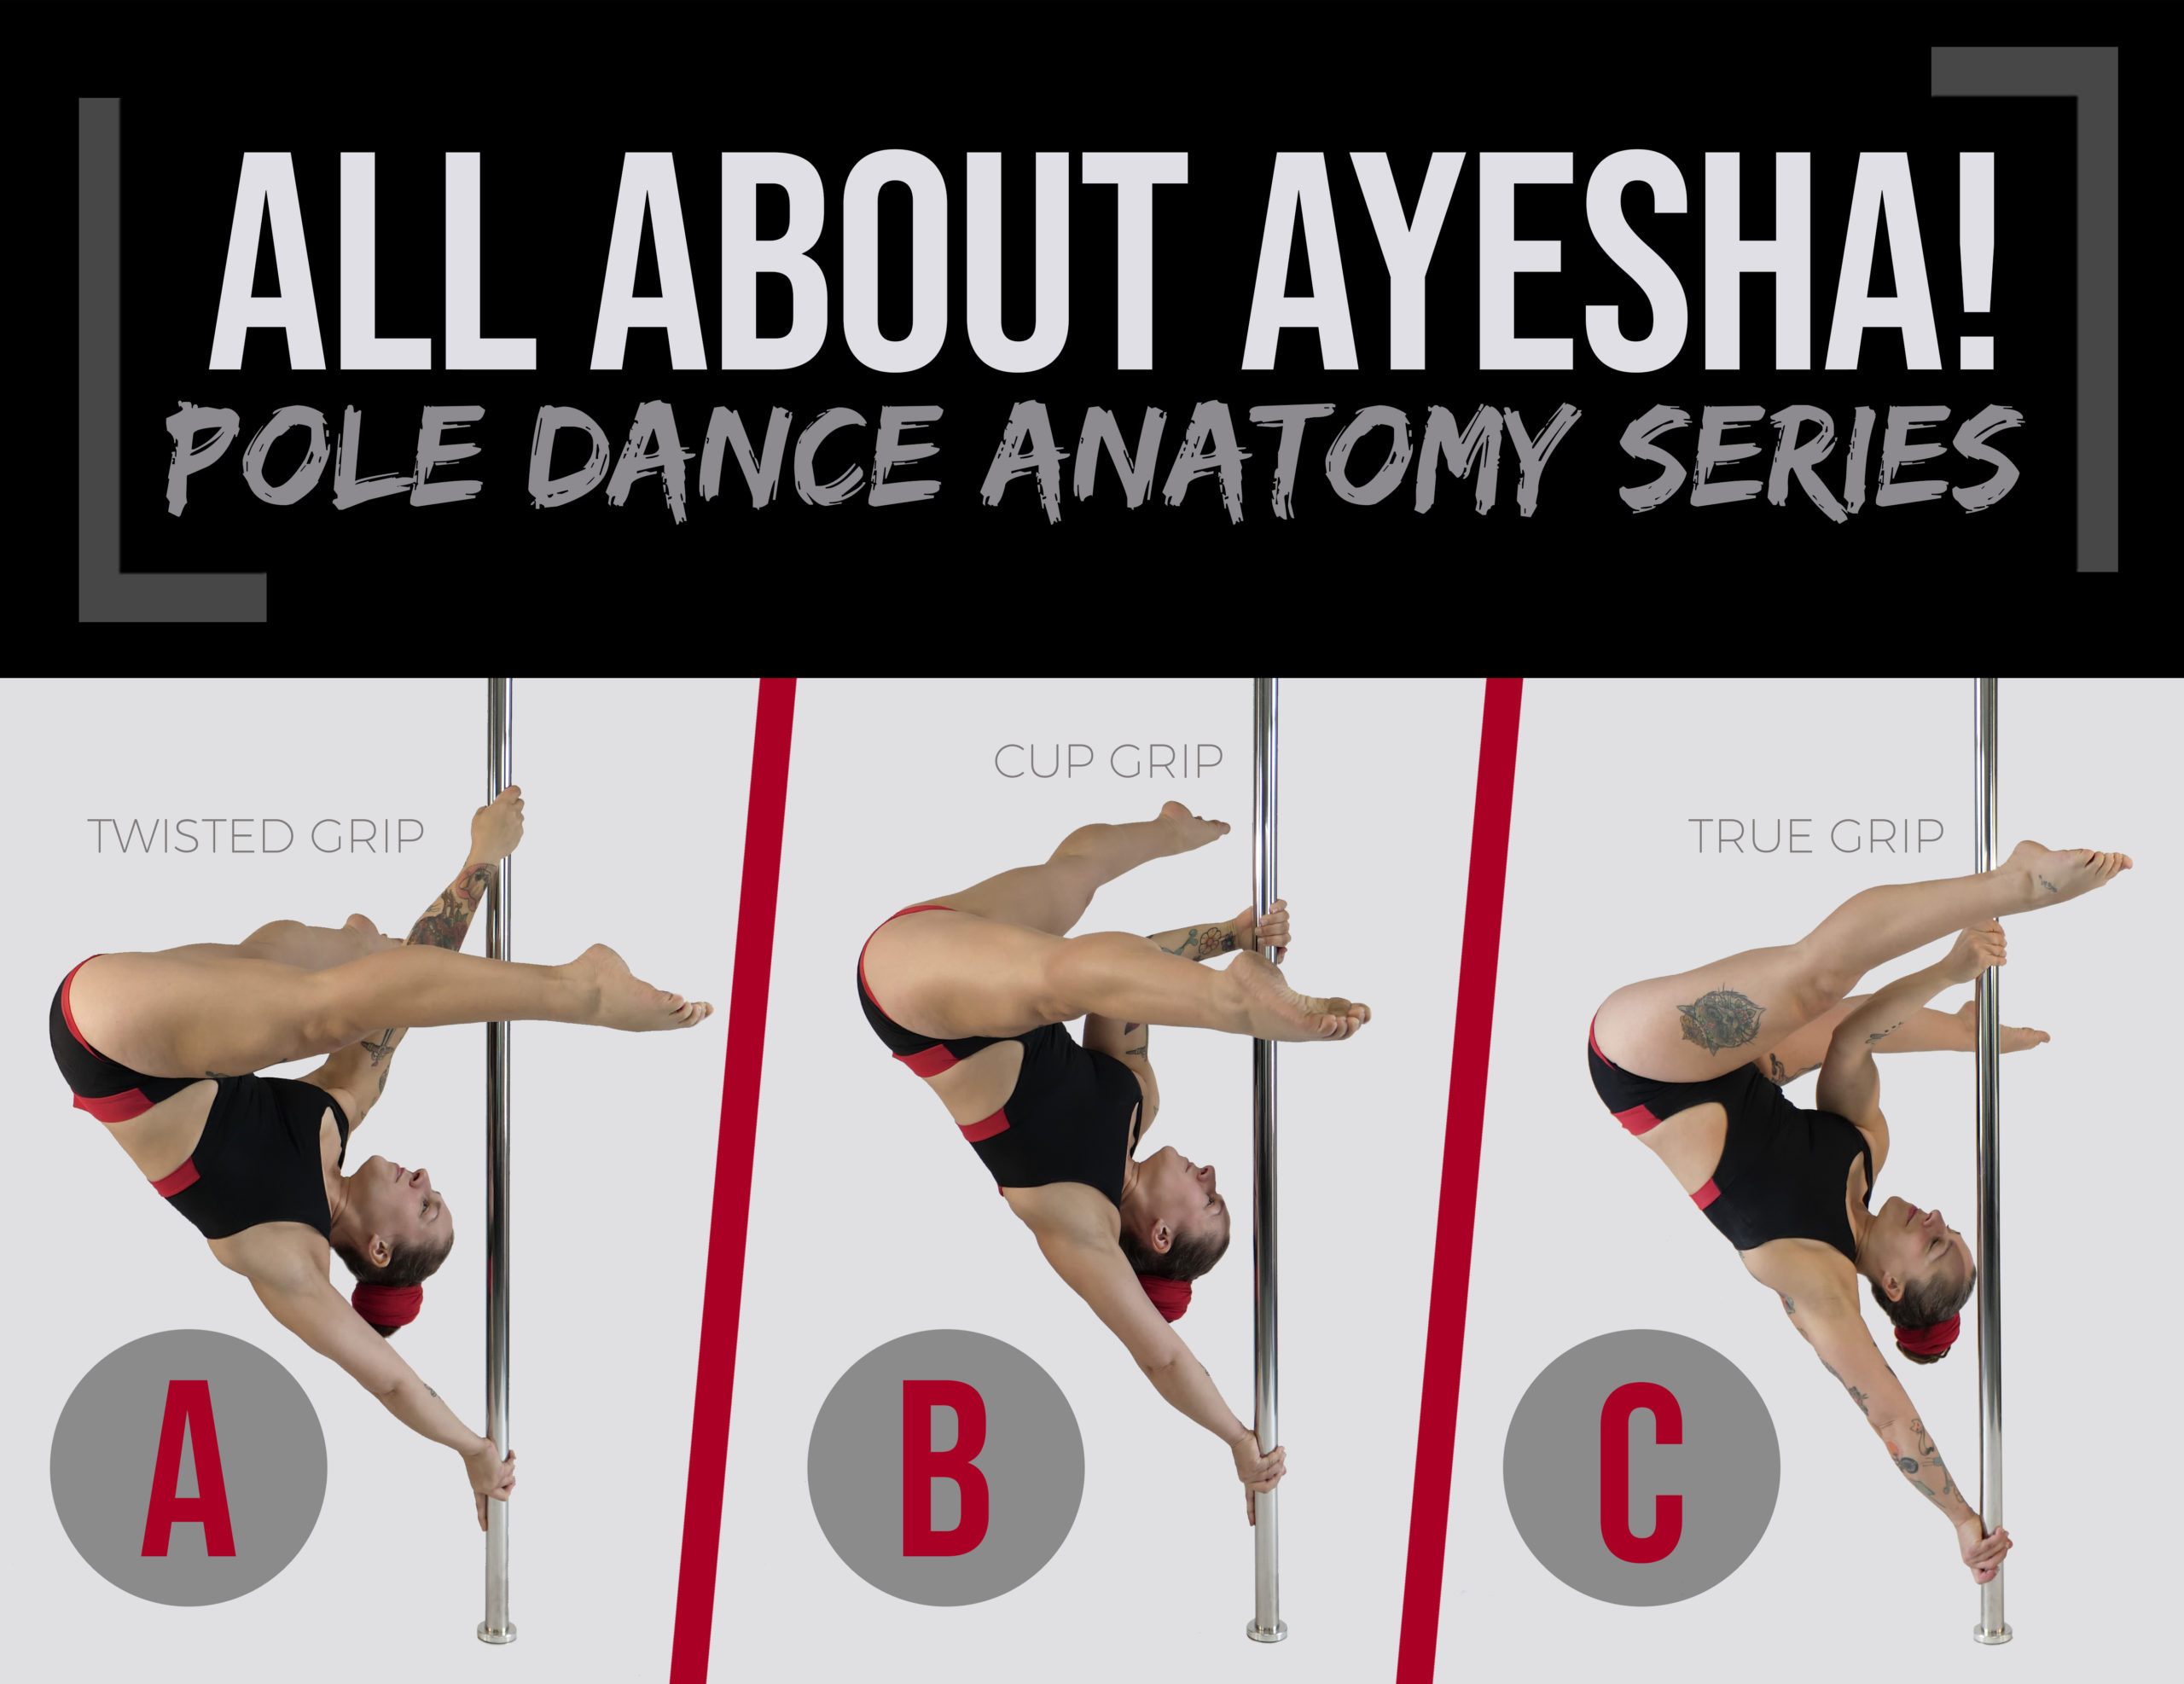 Pole dance anatomy